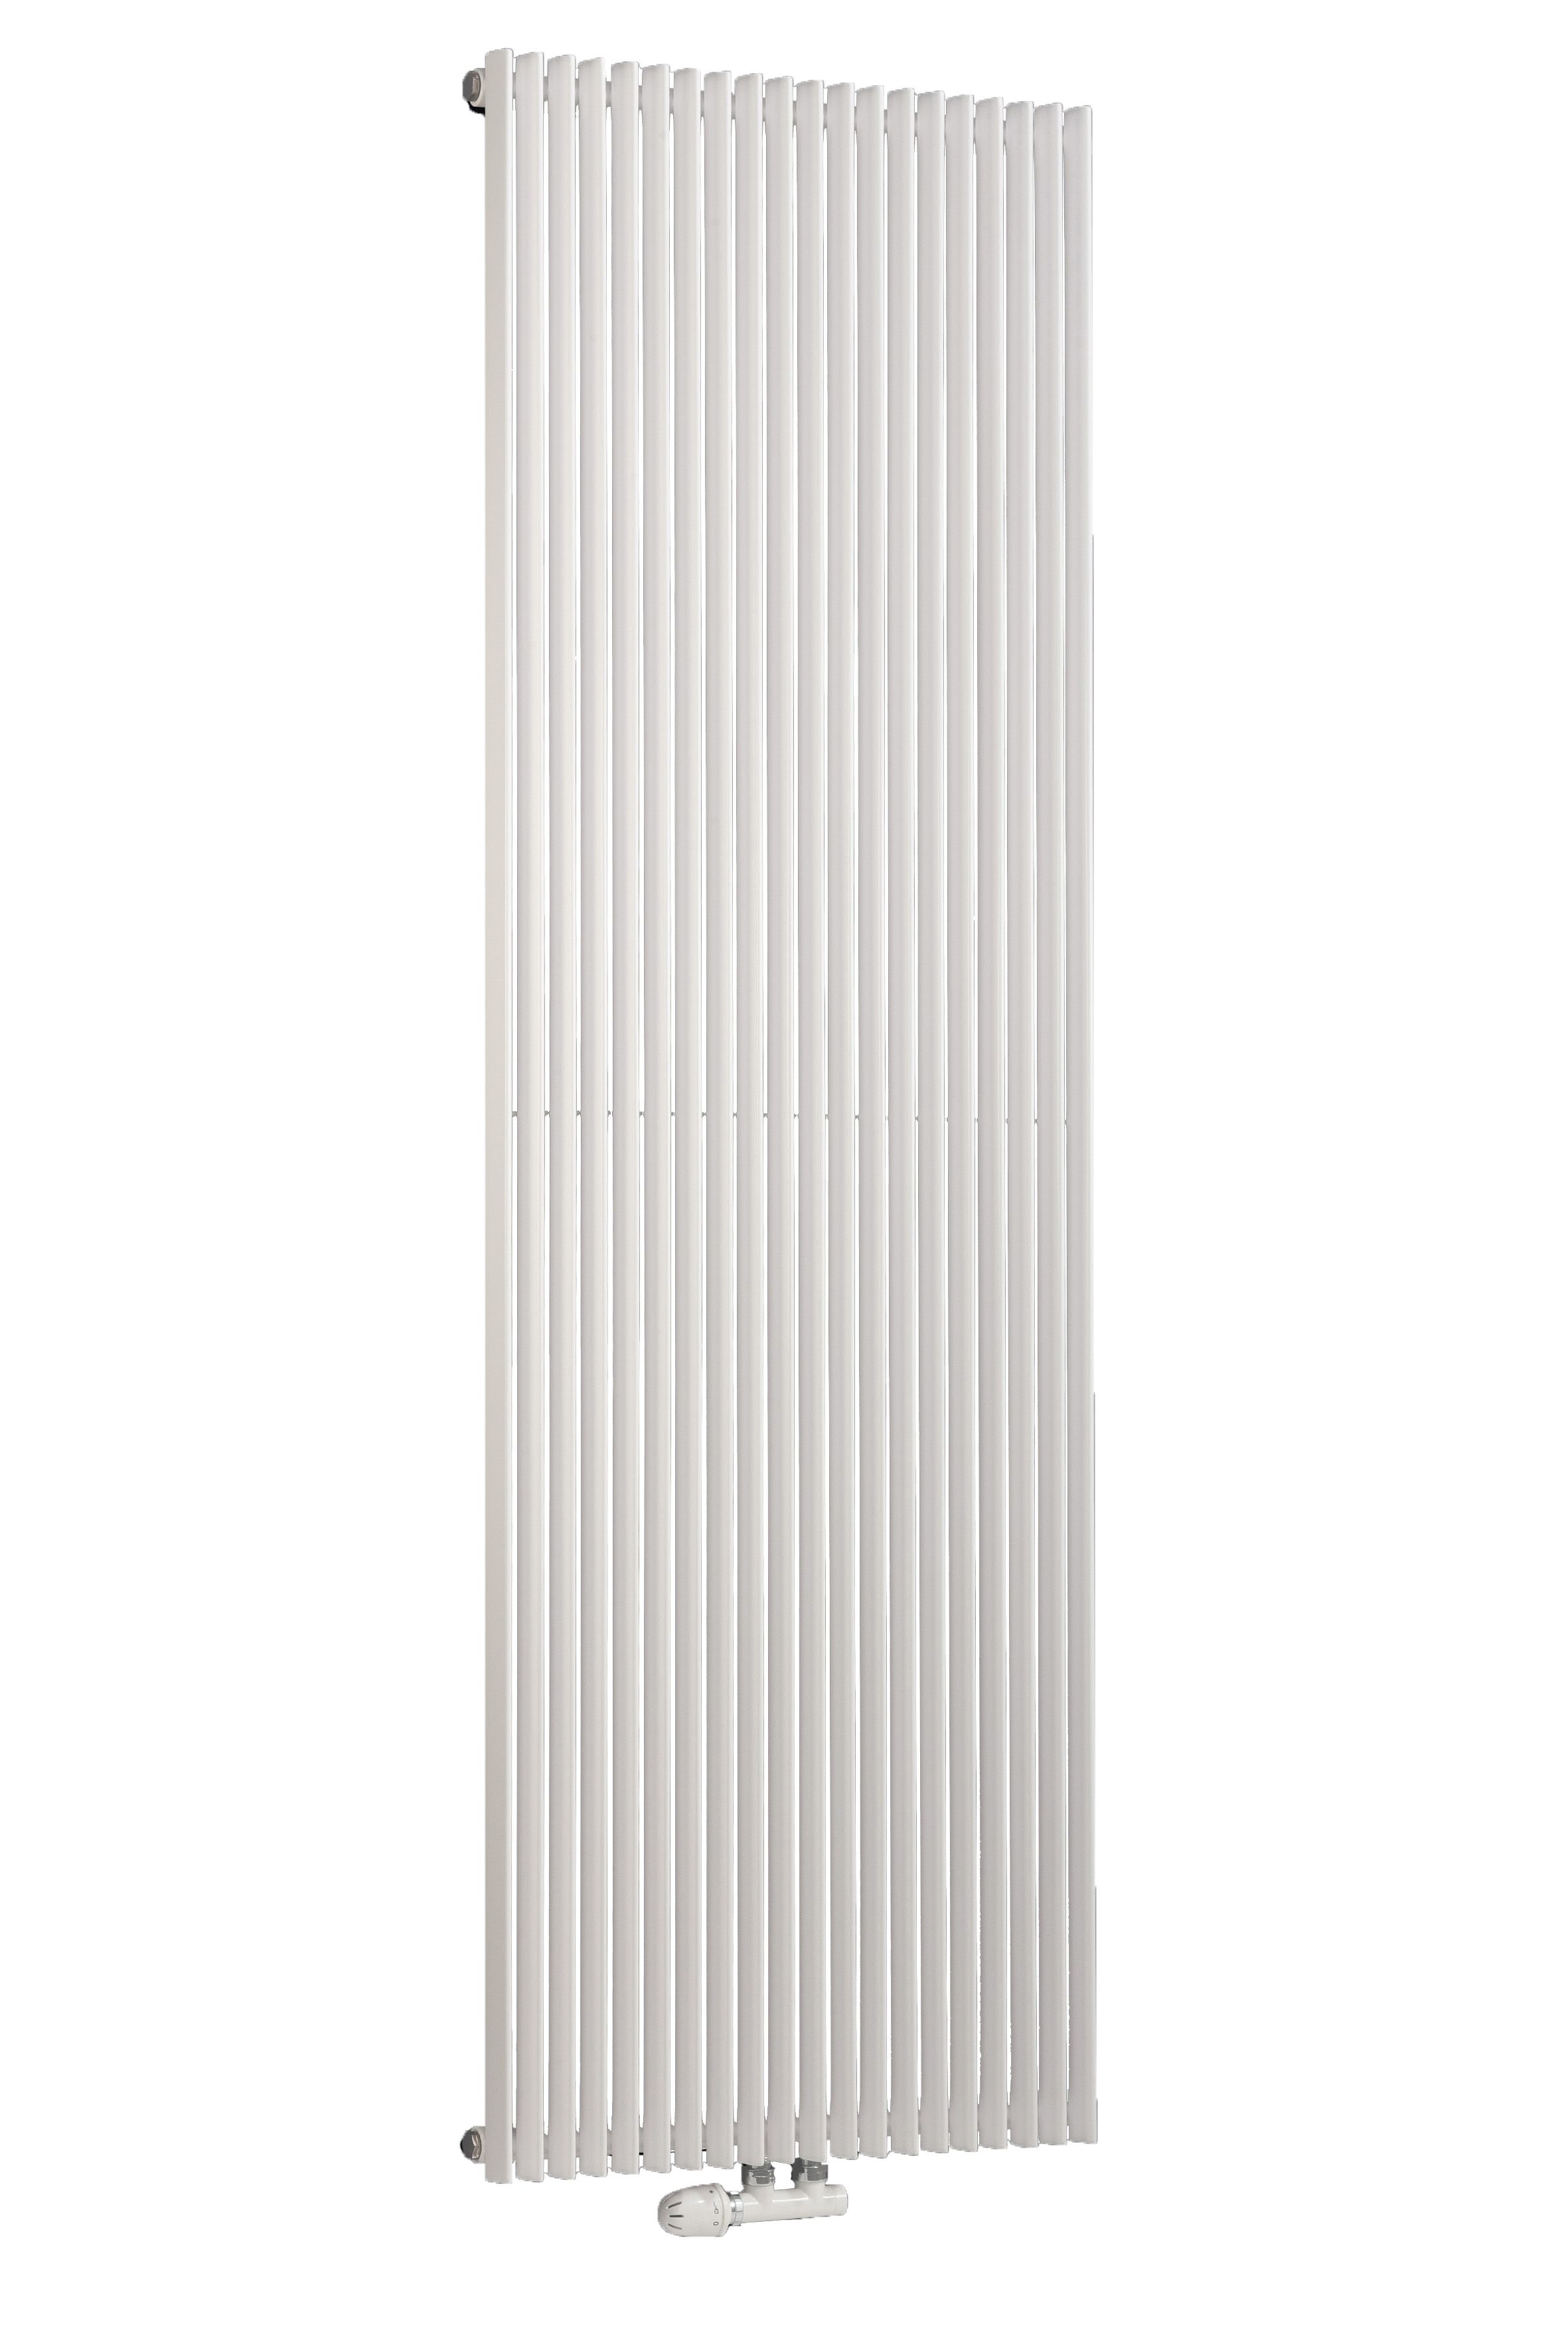 Ximax Triton Anthracite Vertical Designer Radiator, (W)600mm x (H)1800mm